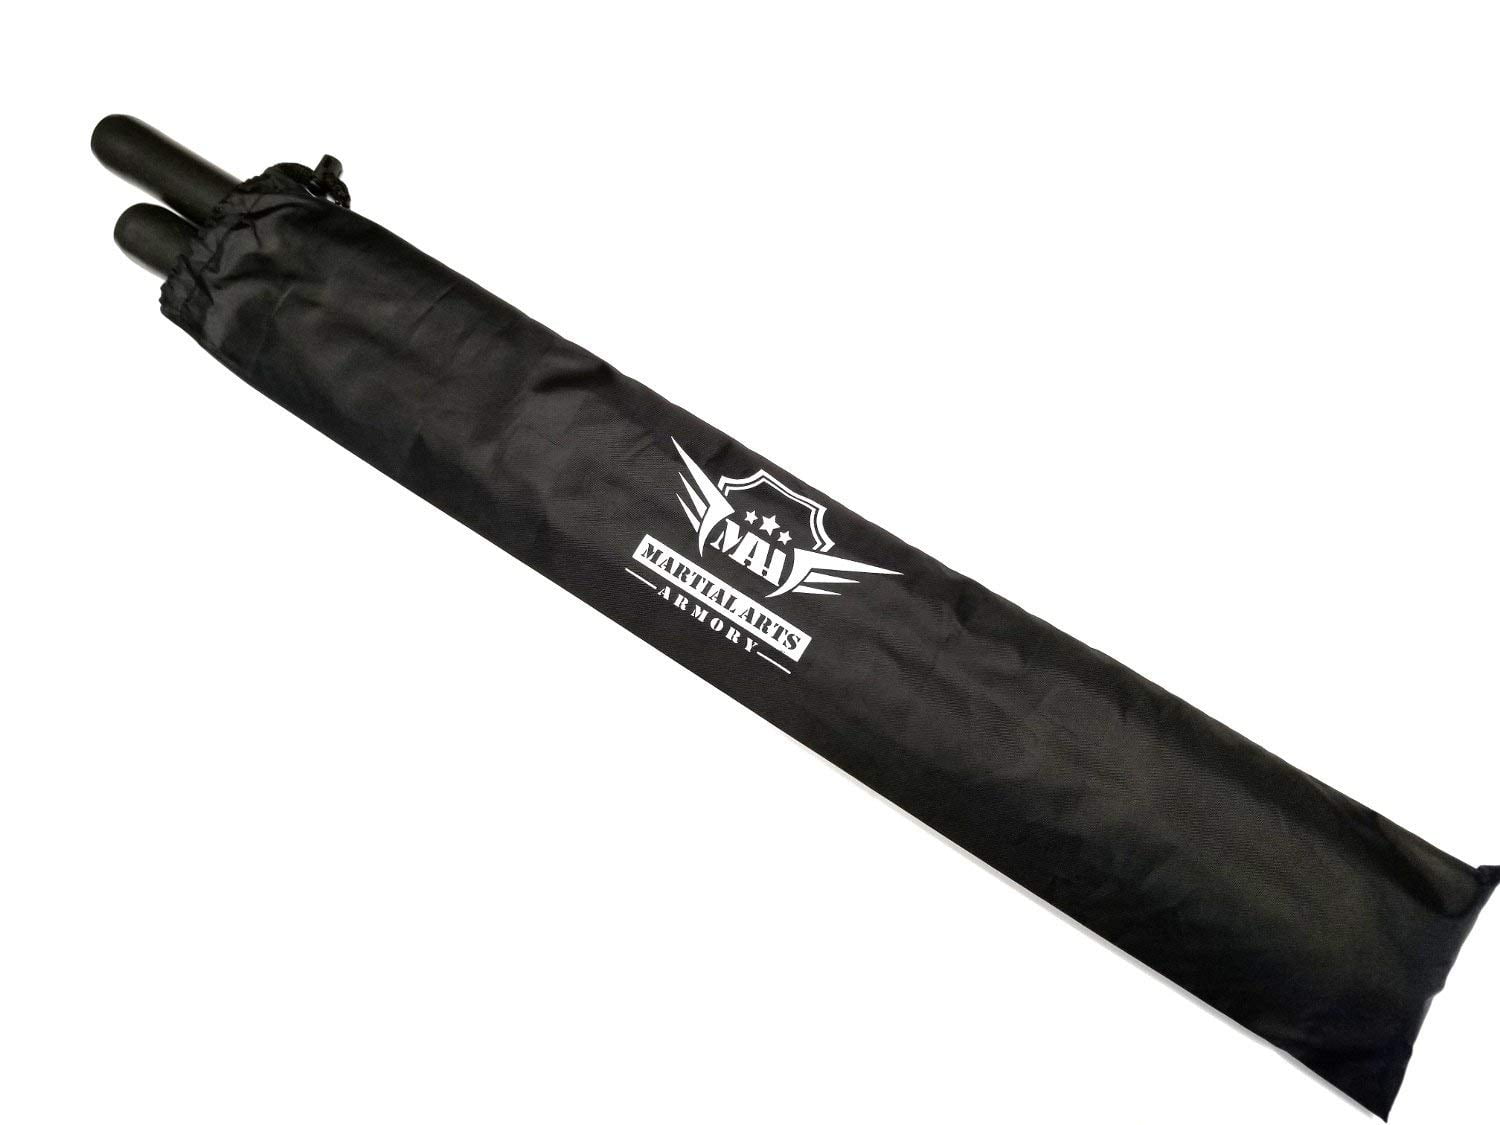 BladesUSA E614 Foam Padded Training Escrima Stick 26-Inch 